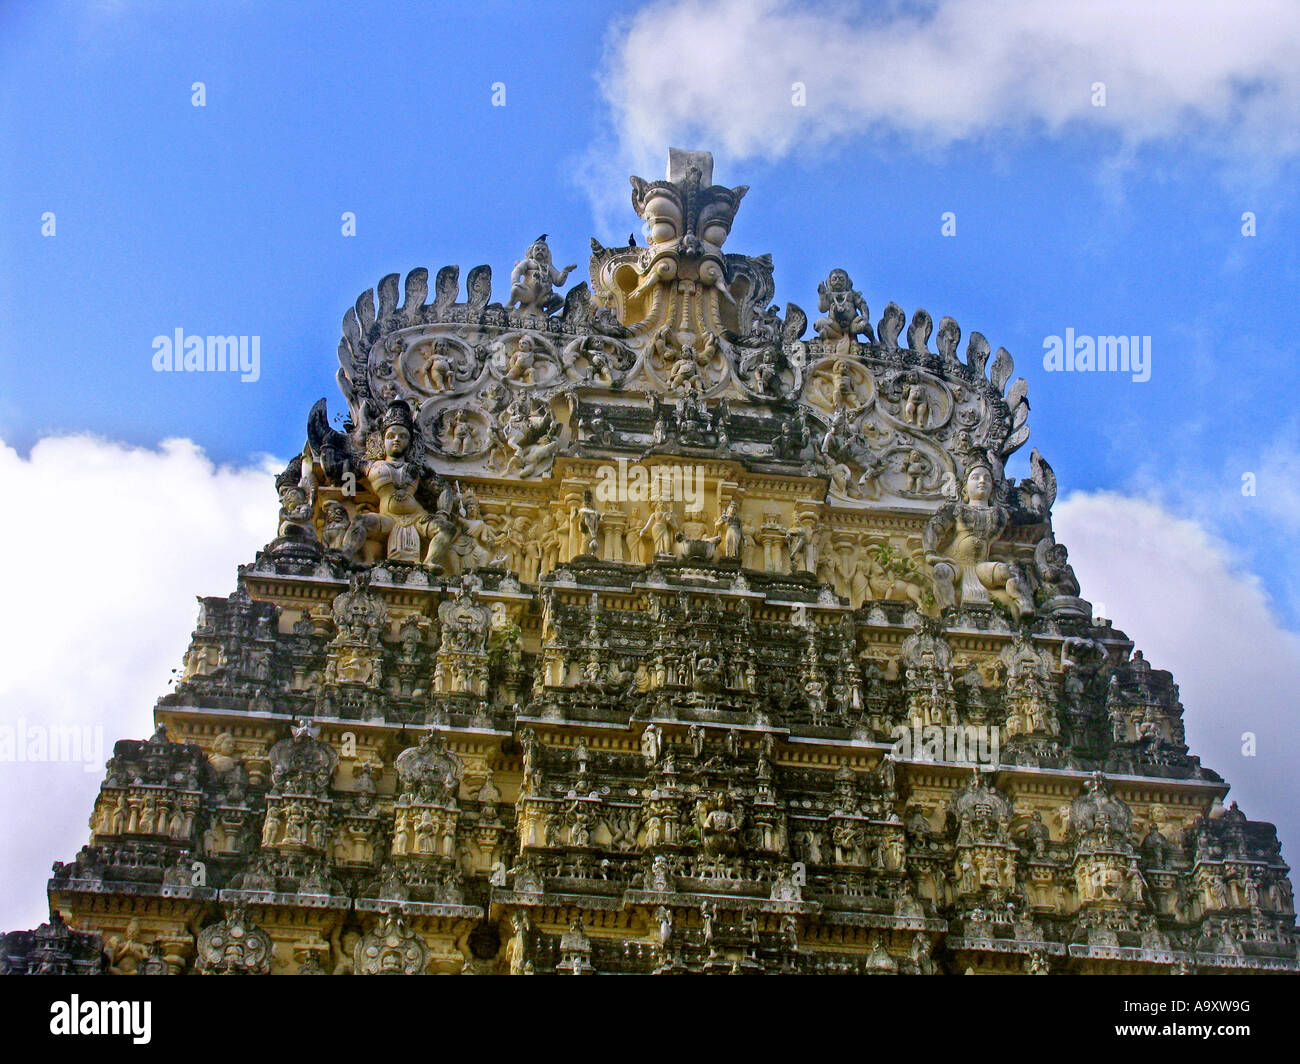 Shee Anantha Padmanabha Swamy Temple, dedicated to Hindu Lord ...